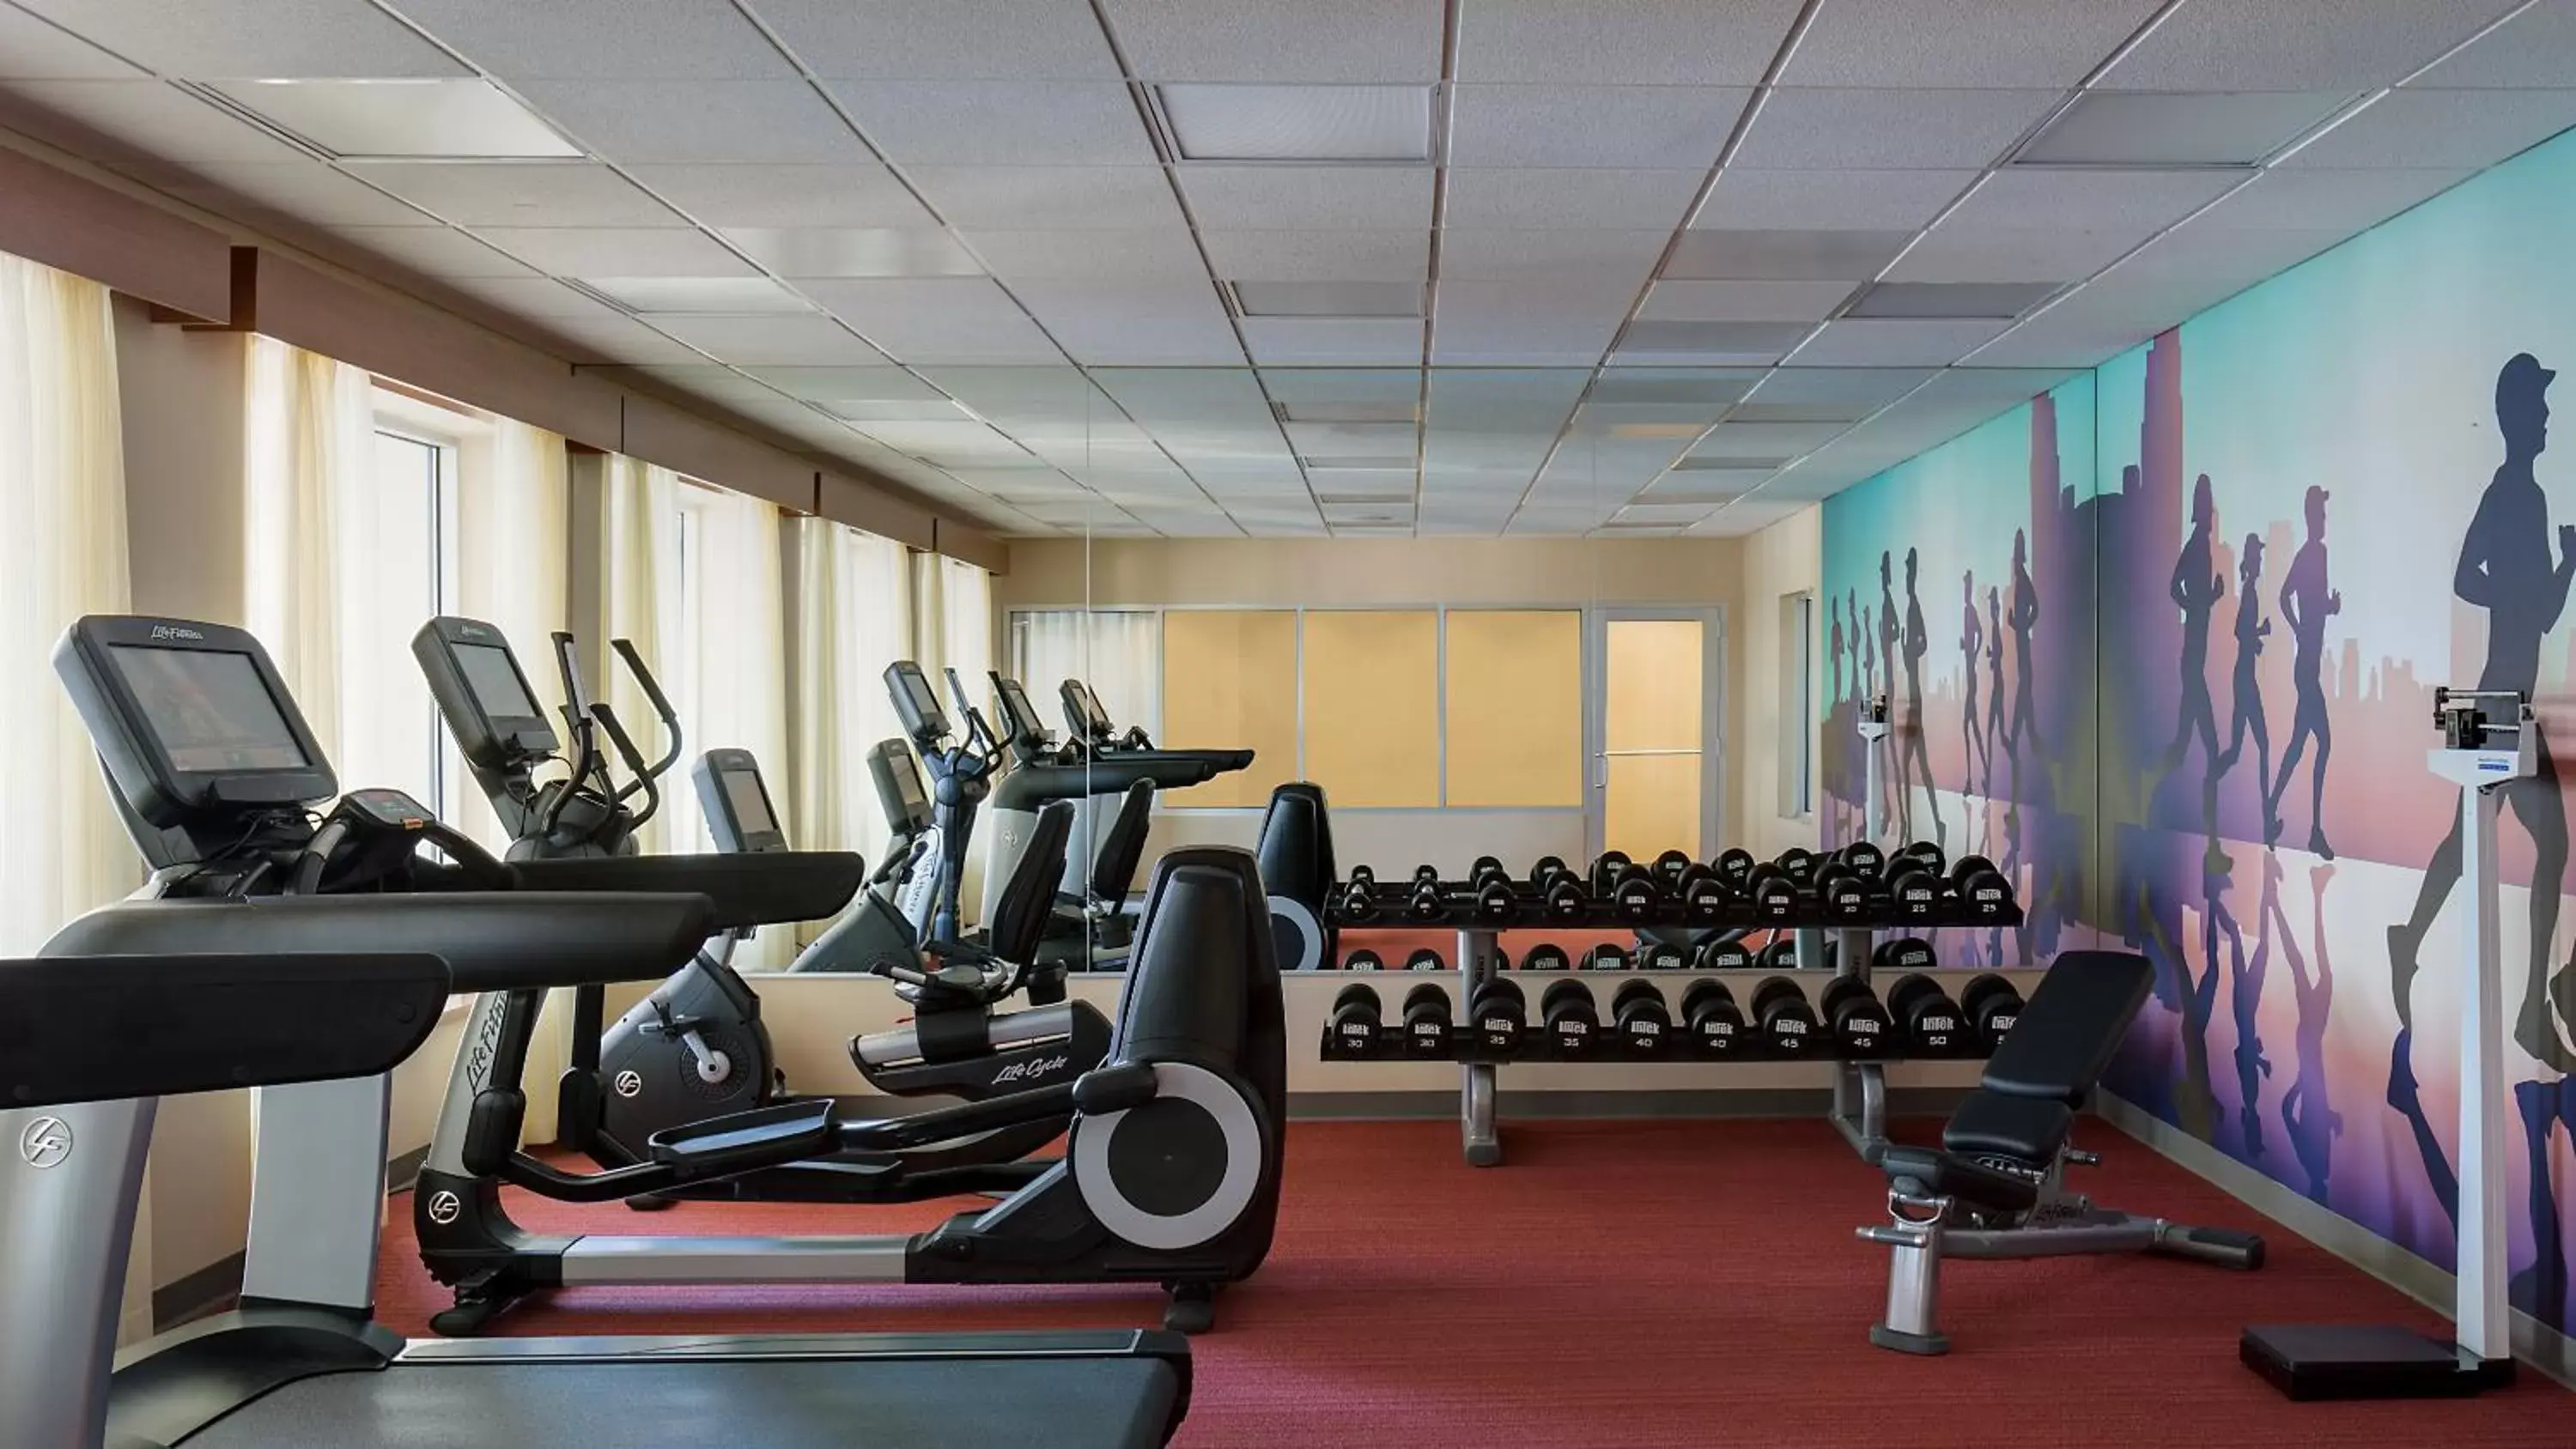 Fitness centre/facilities, Fitness Center/Facilities in Hyatt Place DFW